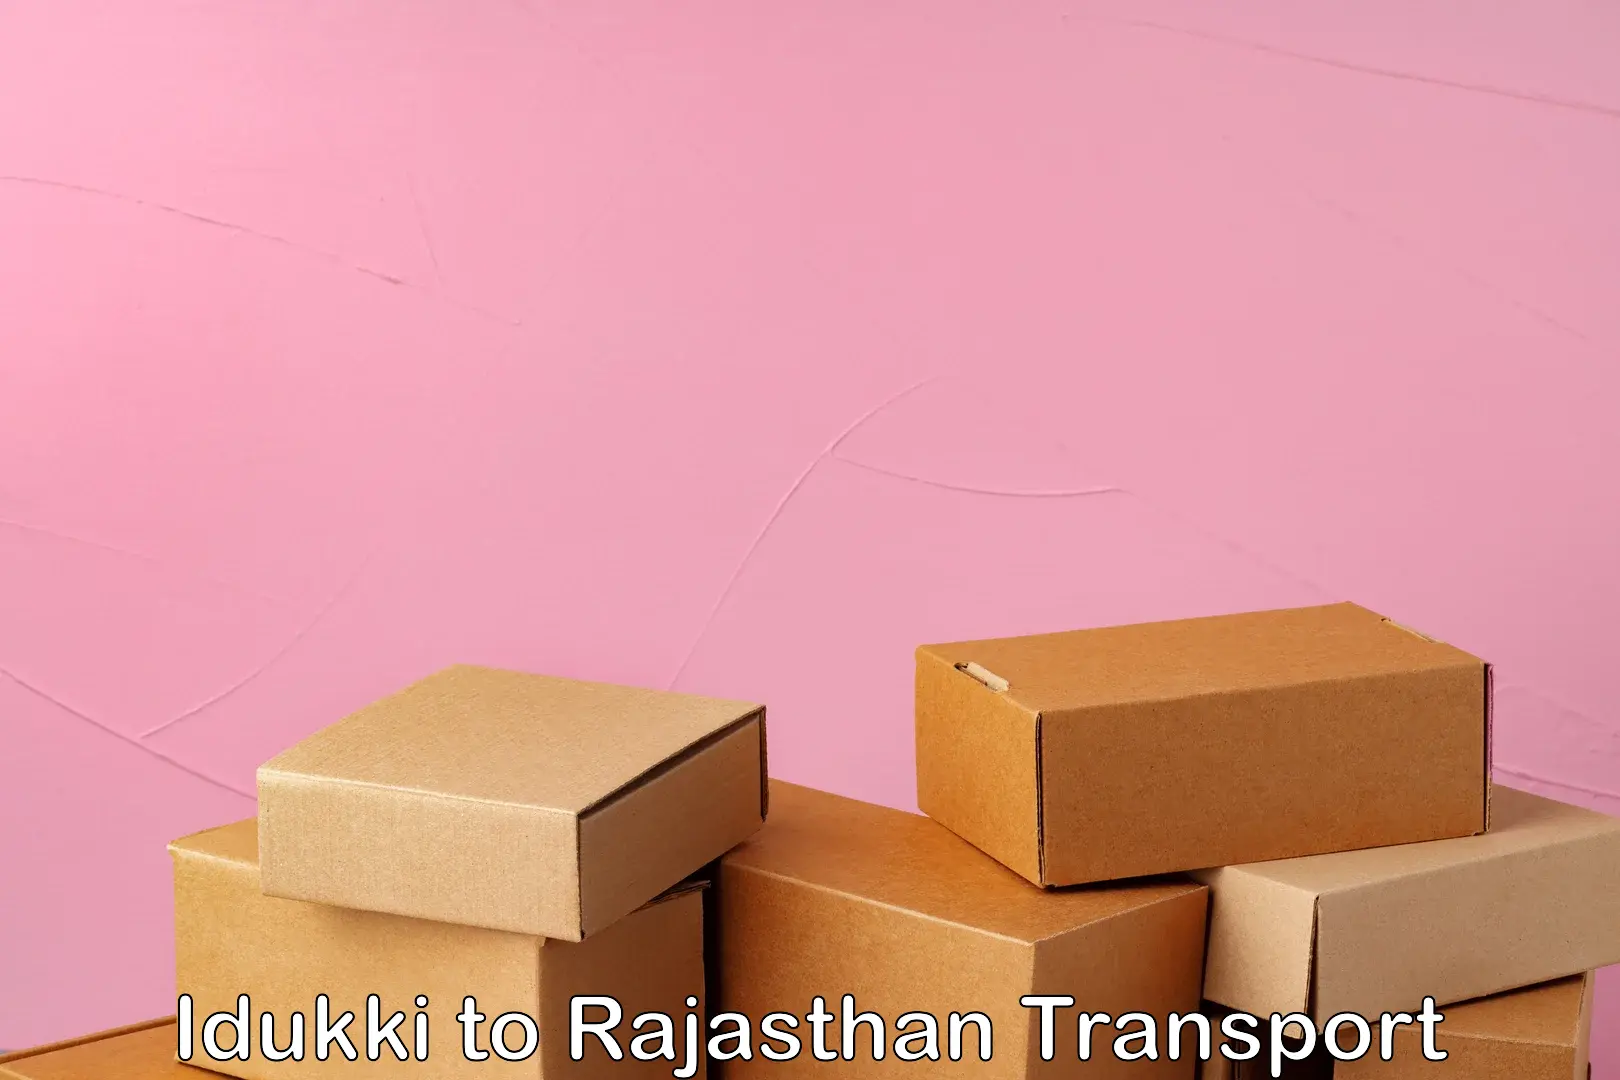 Truck transport companies in India Idukki to Rajasthan